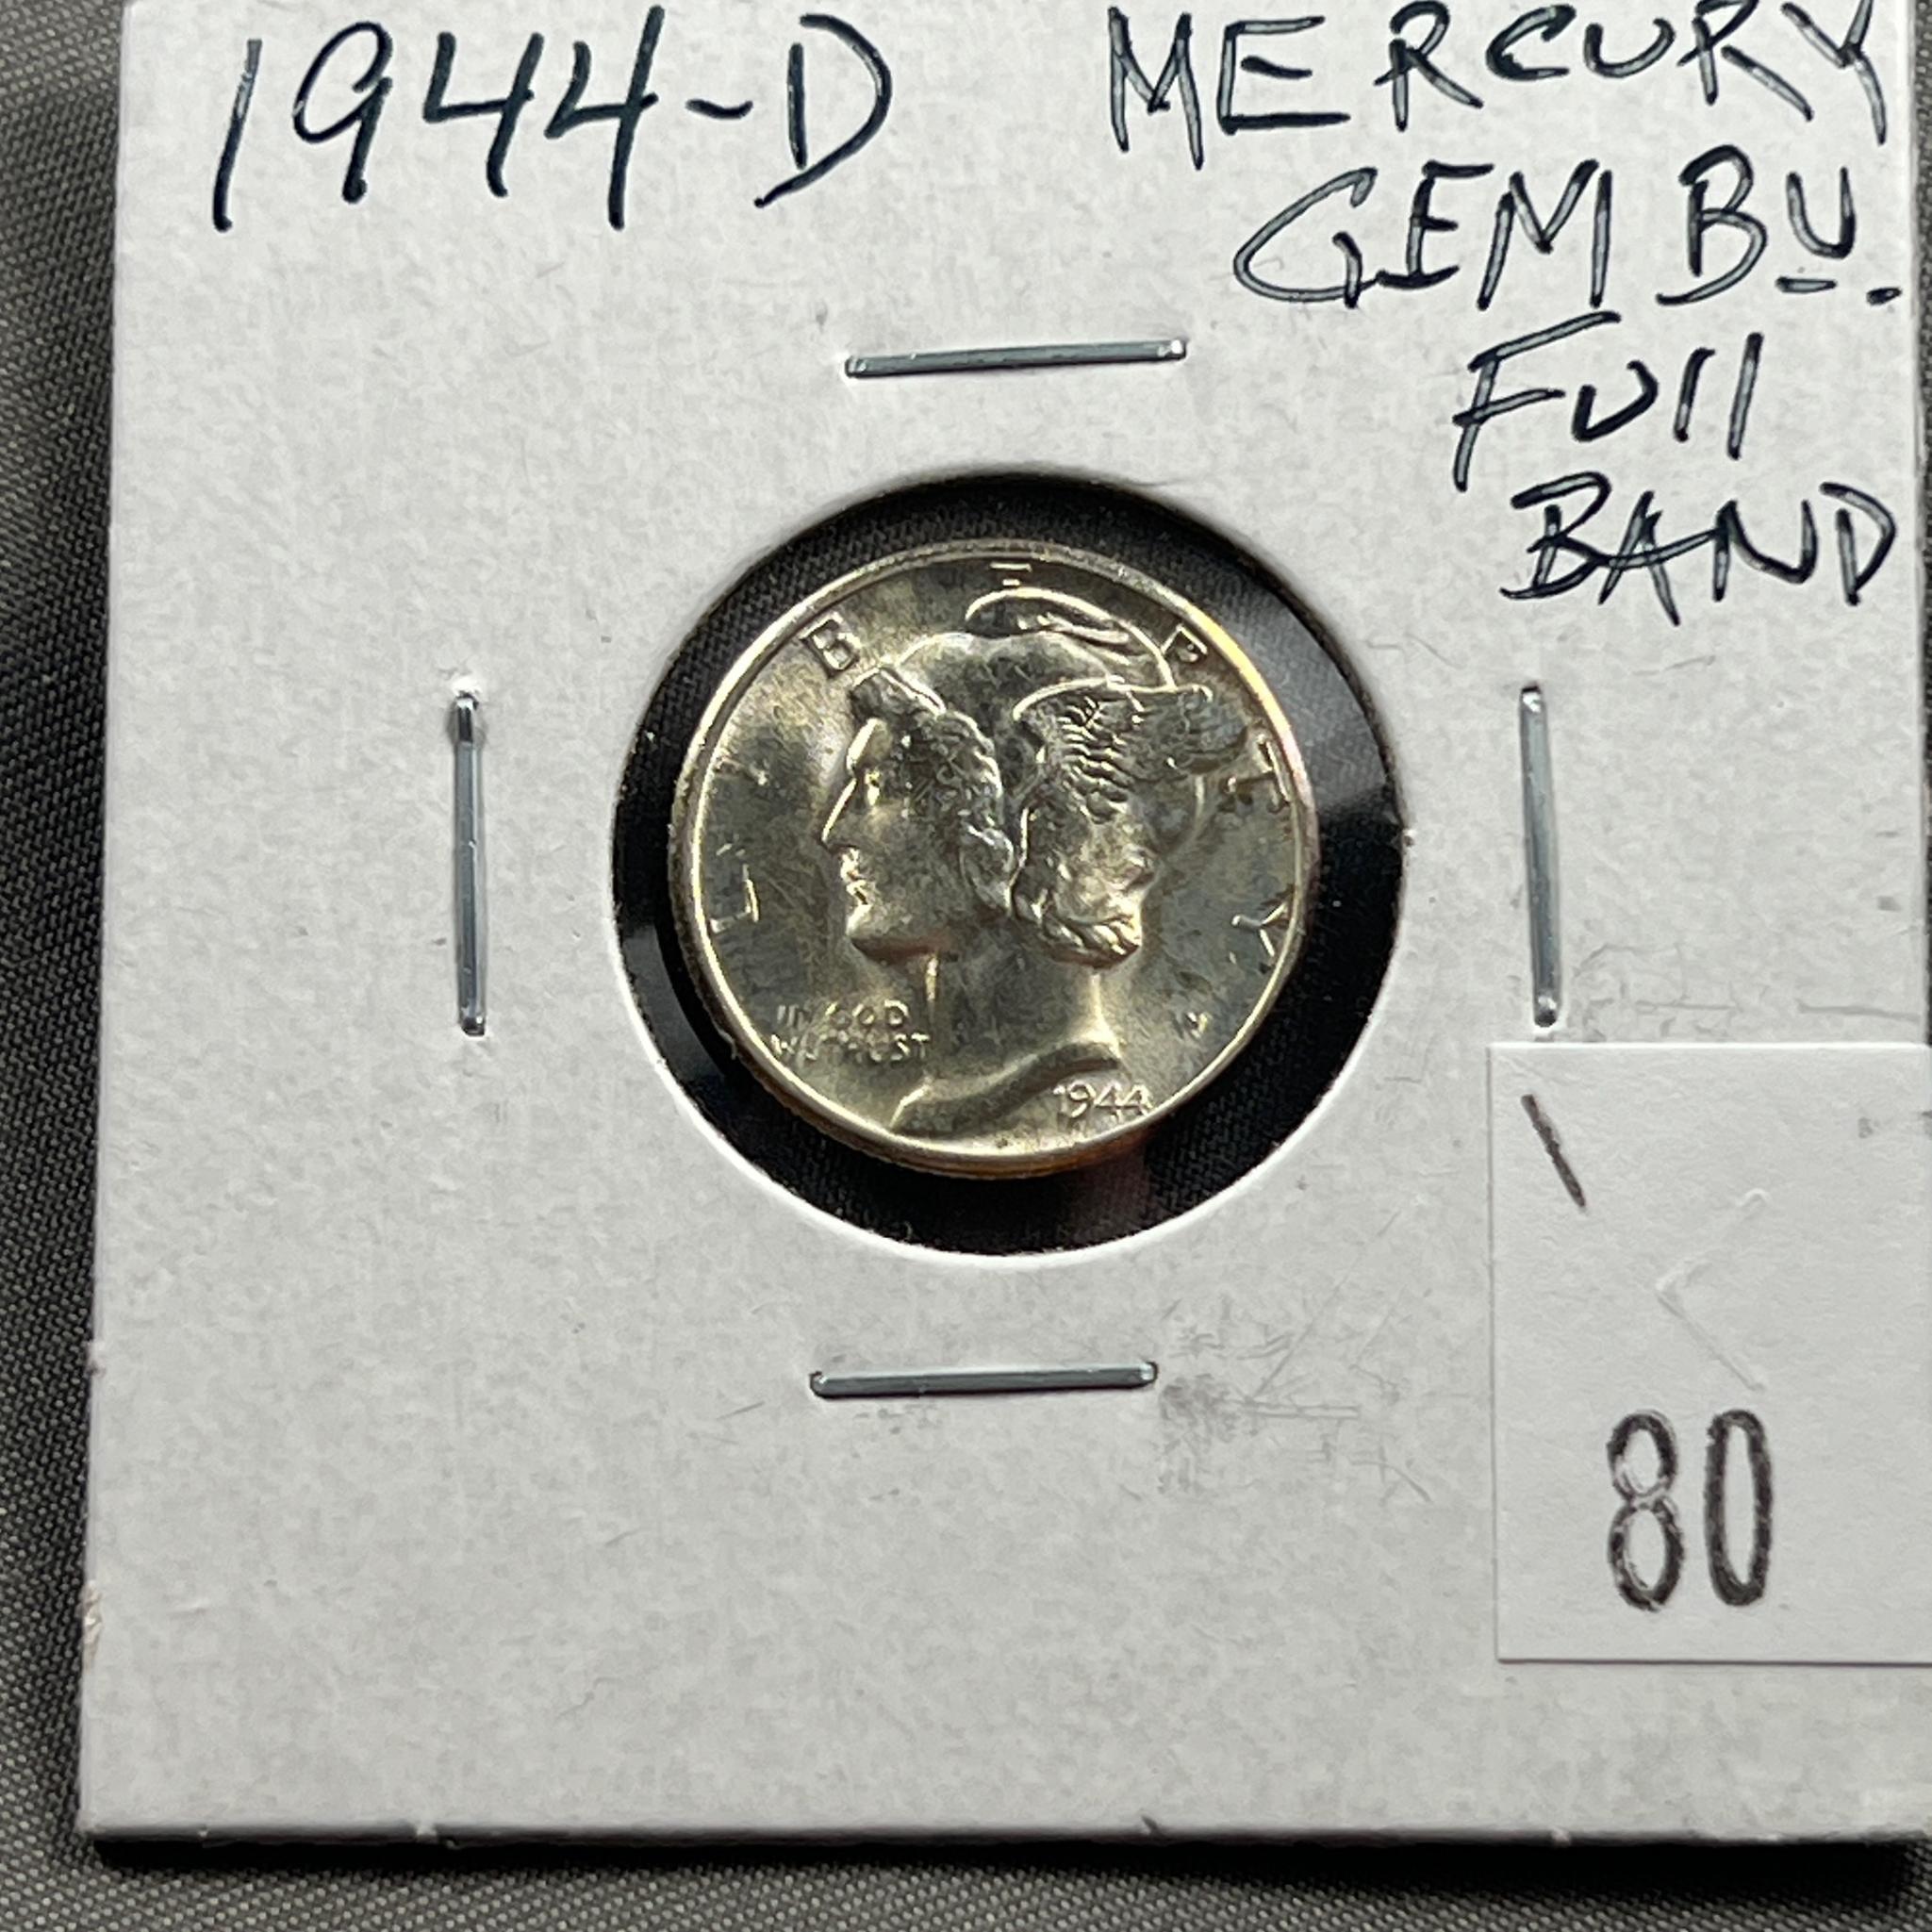 1944-D Mercury Dime, GEM BU, Full Bands